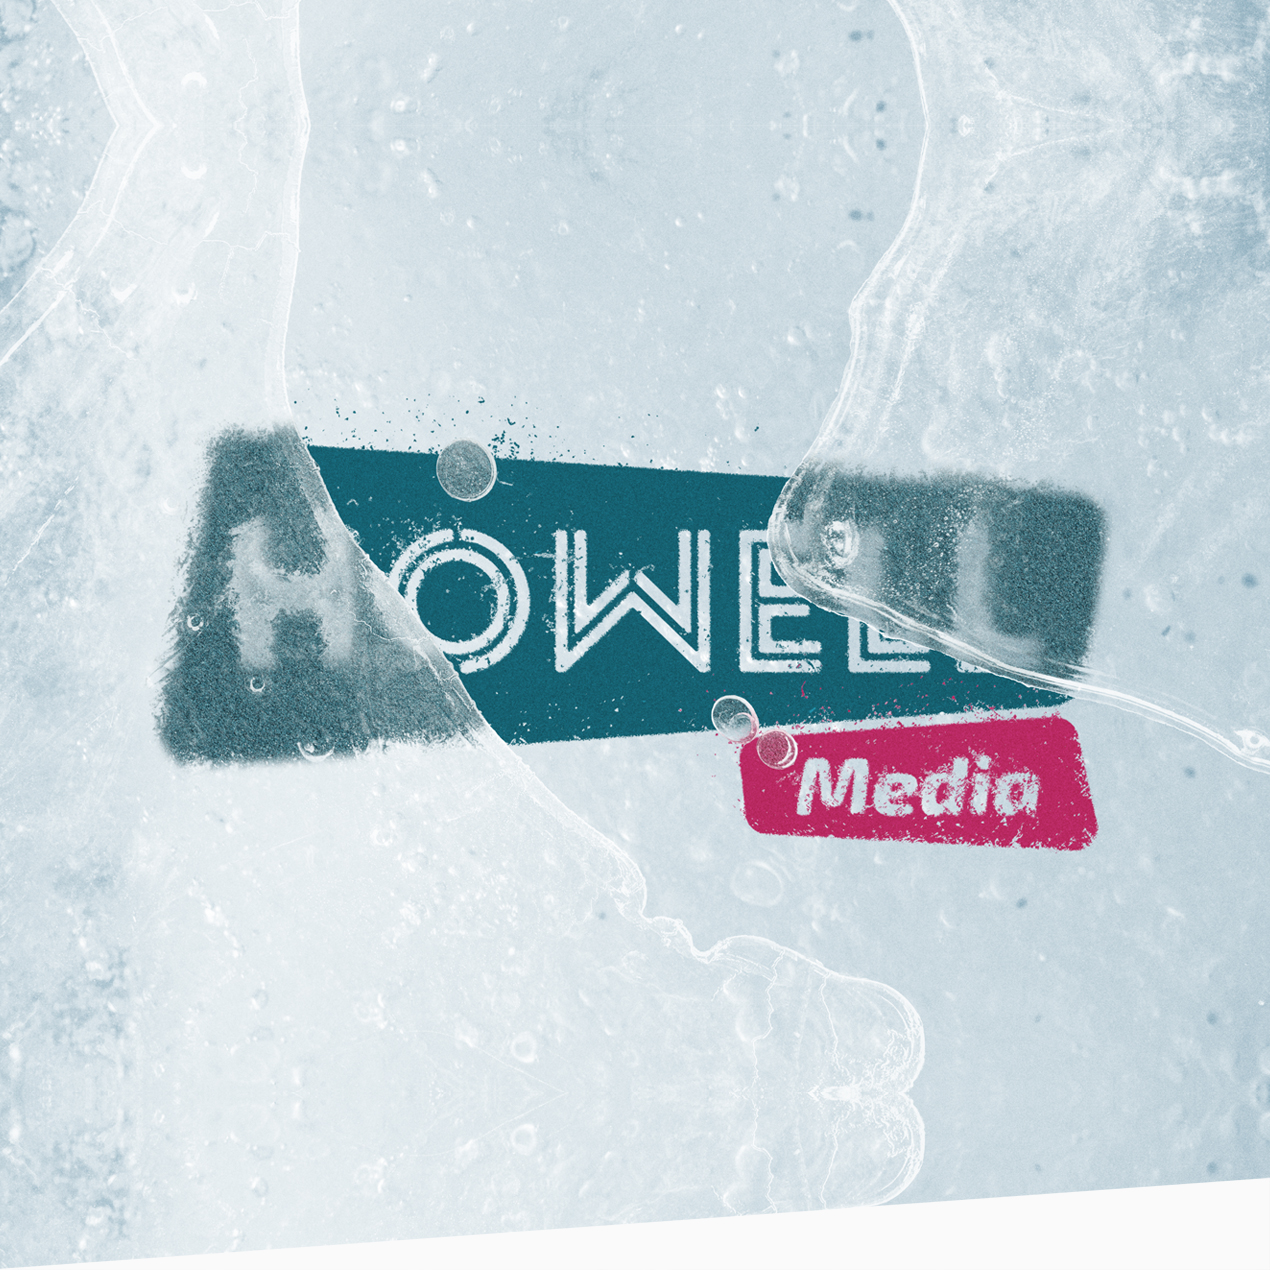 Howell Film is now Howell Media